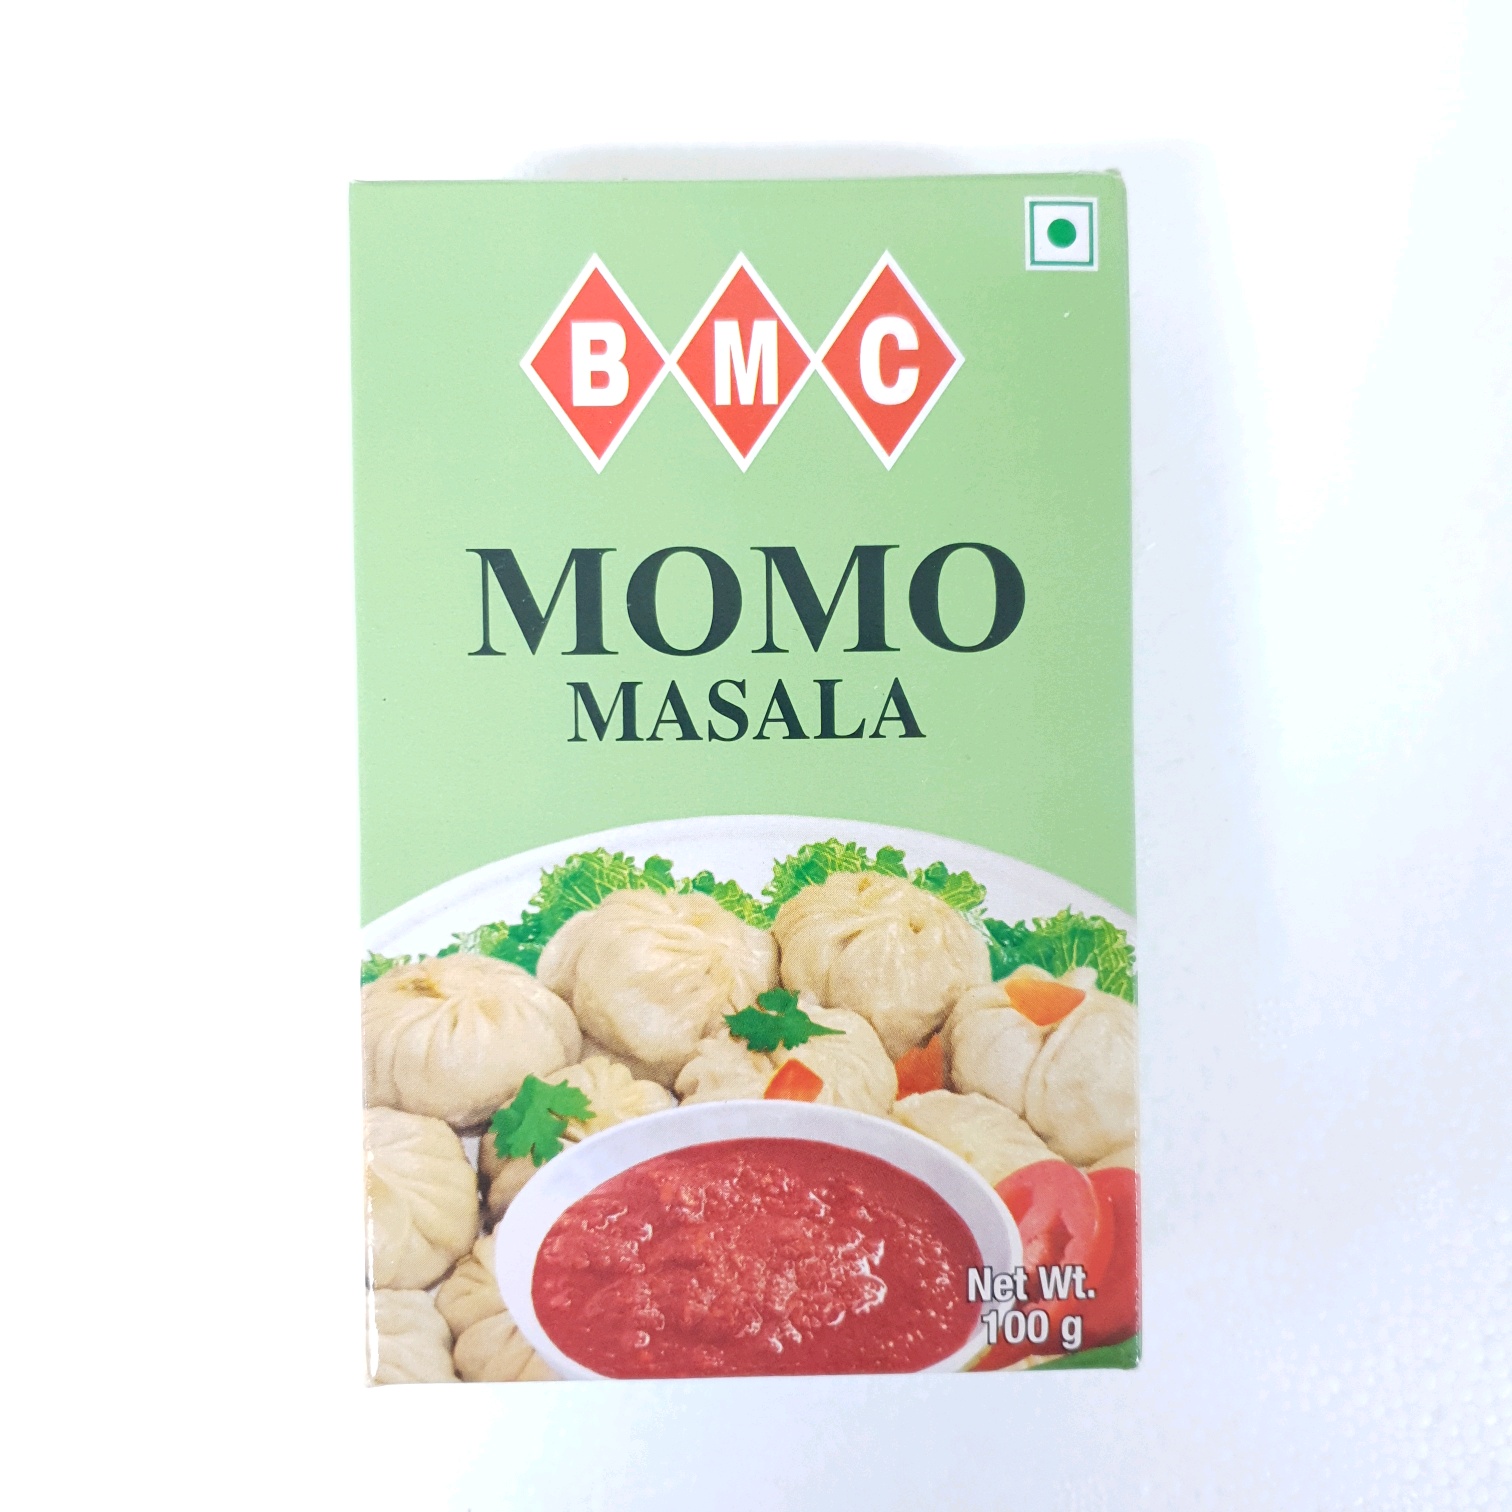 BMC 모모 마살라 MO MO MASALA - 100G 네팔 만두양념 image